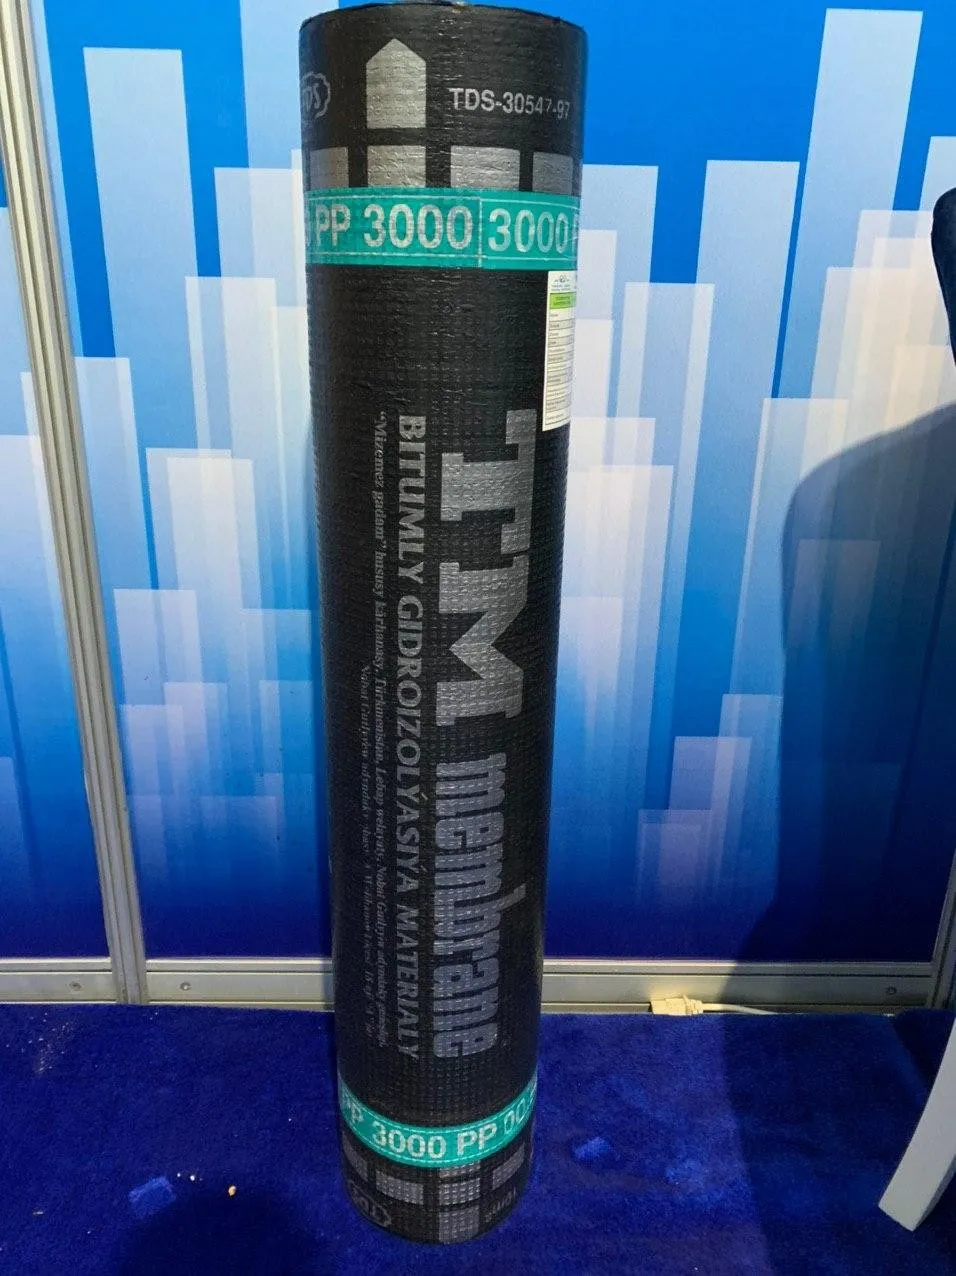 Gidro izolyatsiyalovchi material TM-Membrane (-10°C) P 3000#1